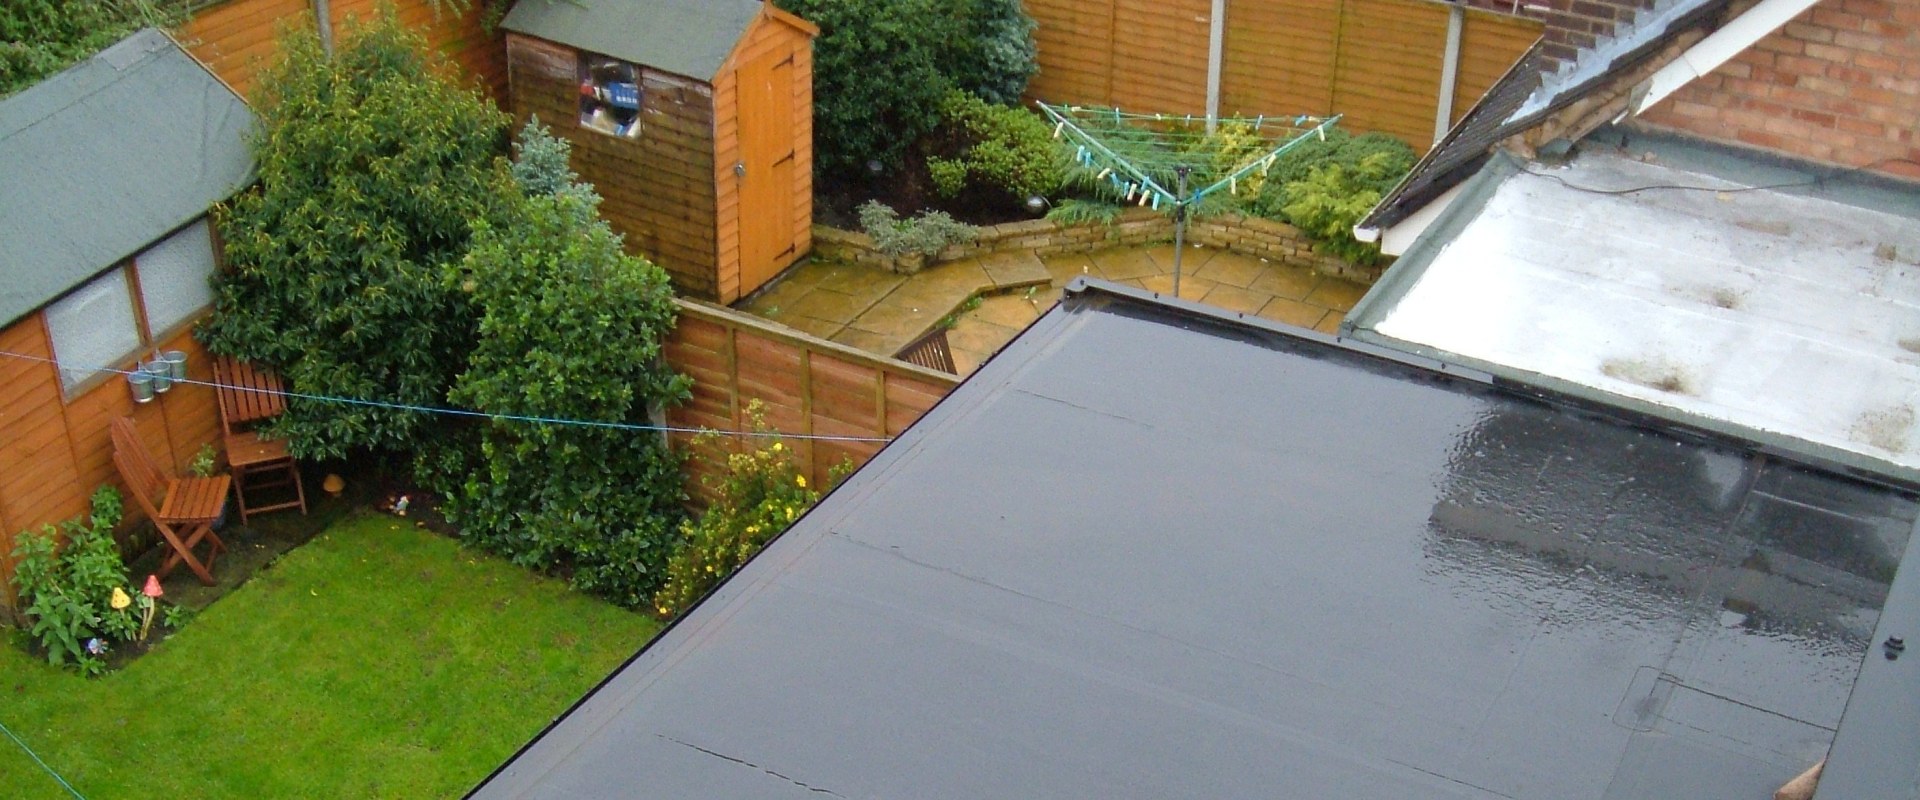 DIY Roof Repair - A How-To Guide